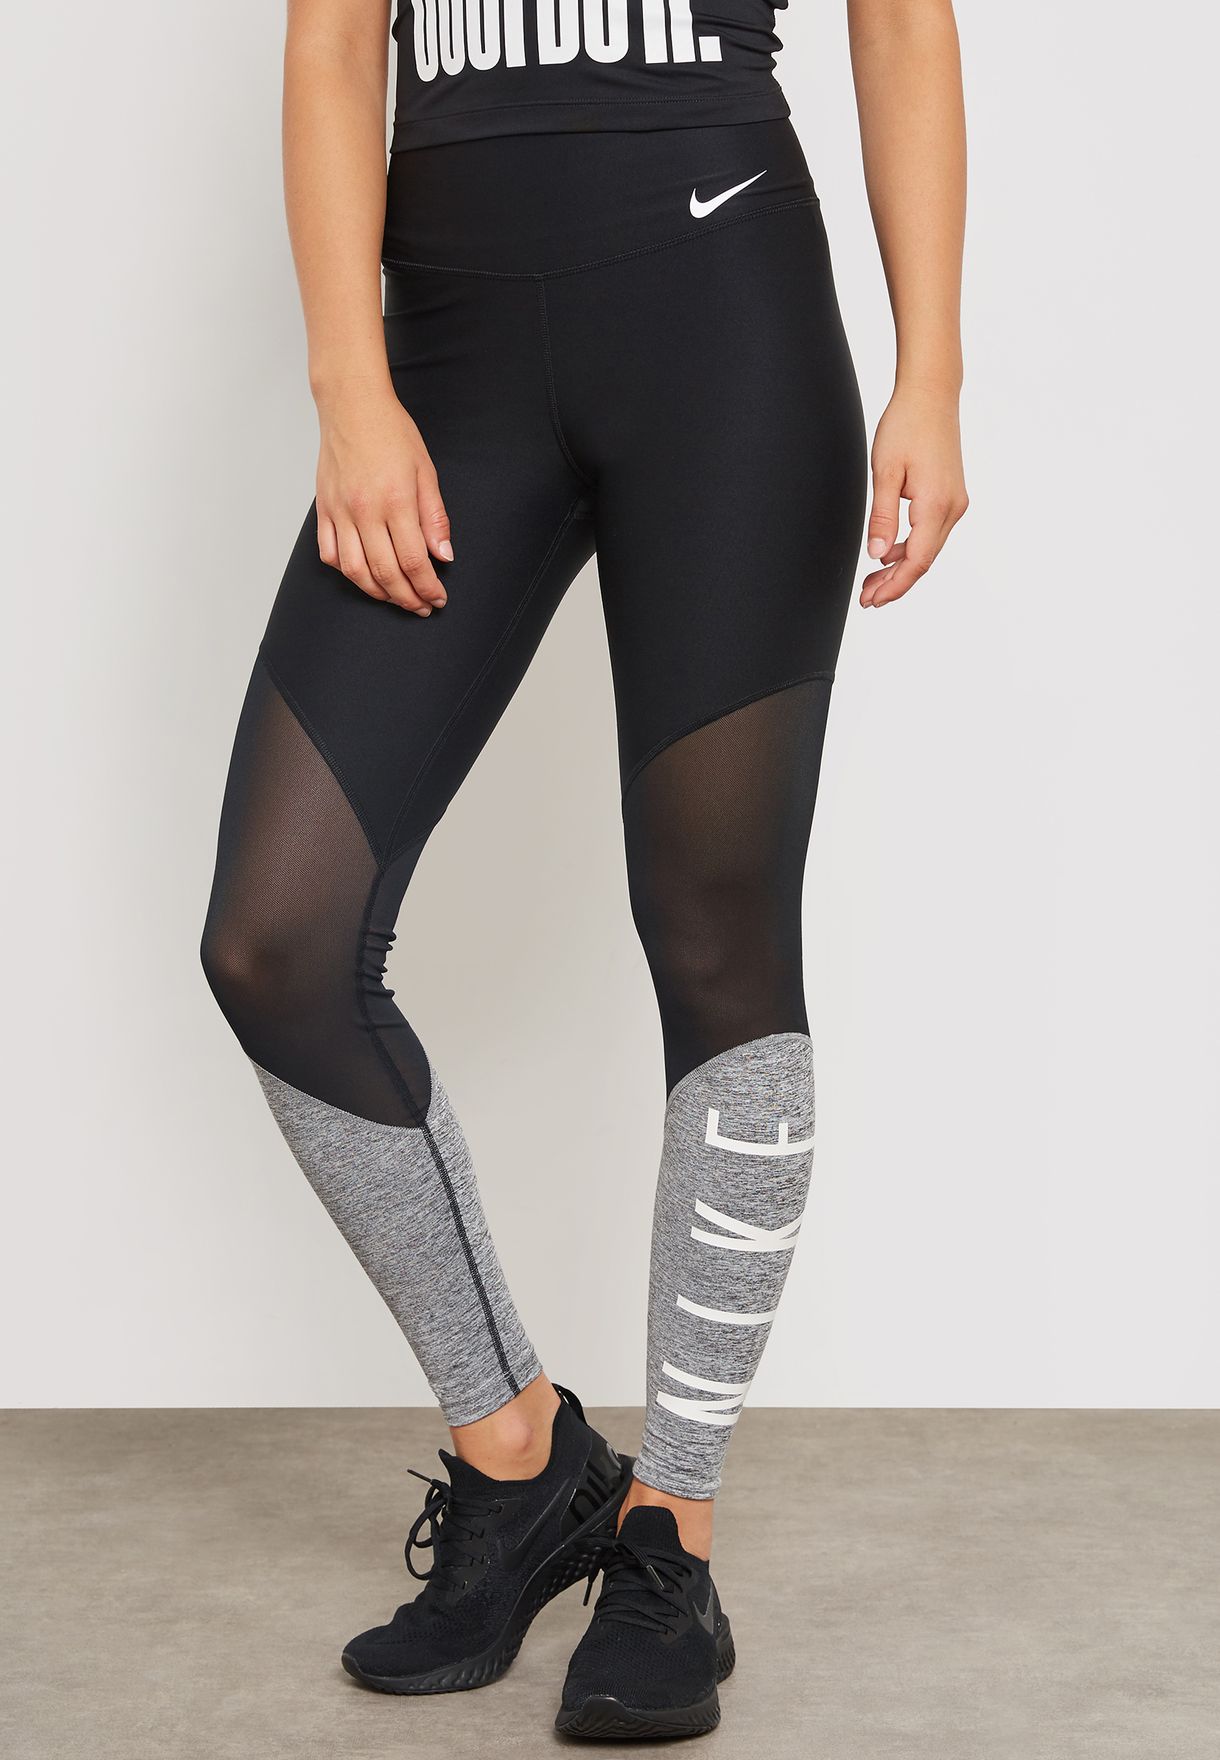 Nike Training leggings with mesh inserts in black